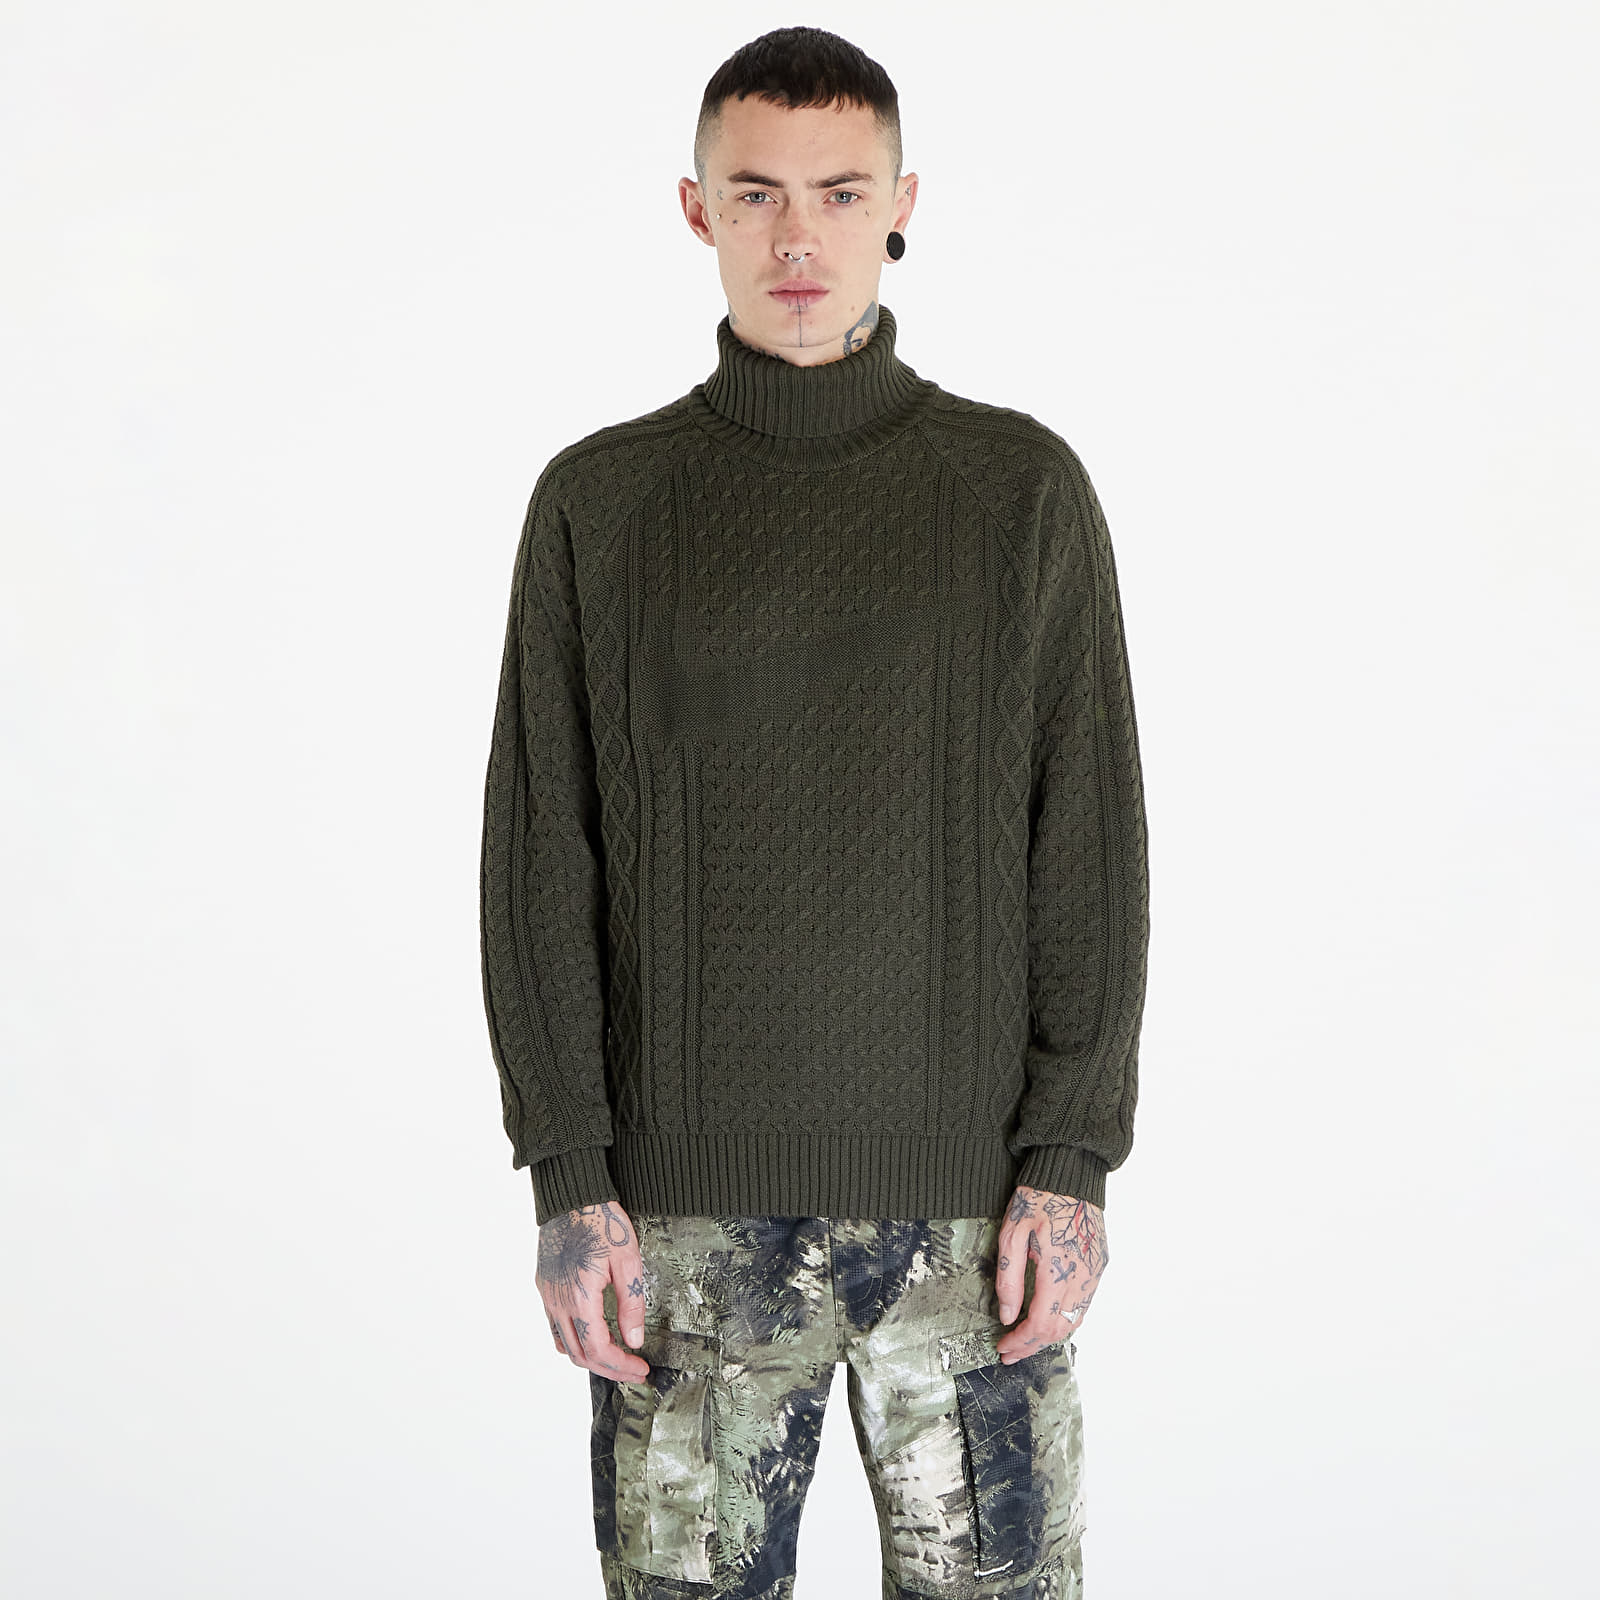 Nike - life men's cable knit turtleneck sweater cargo khaki